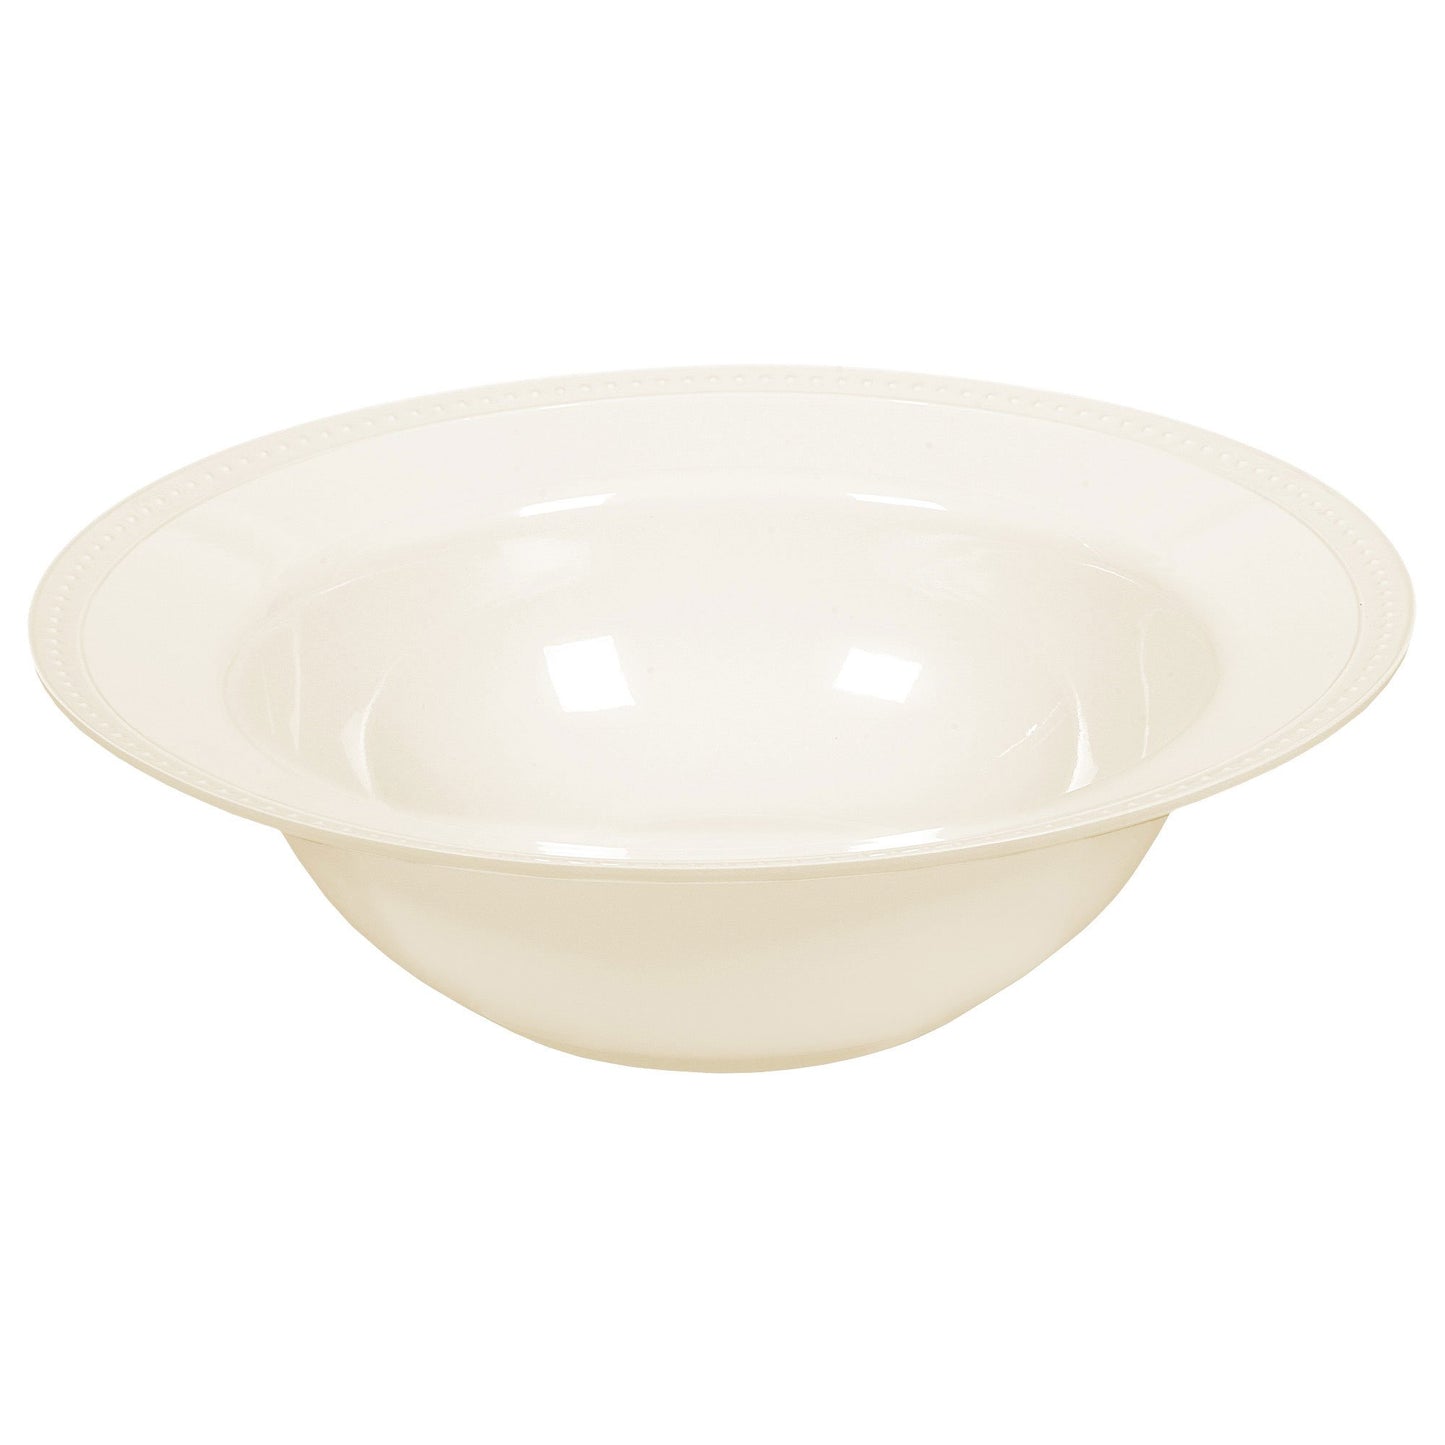 Premium Serving Bowl White with Beaded Rim